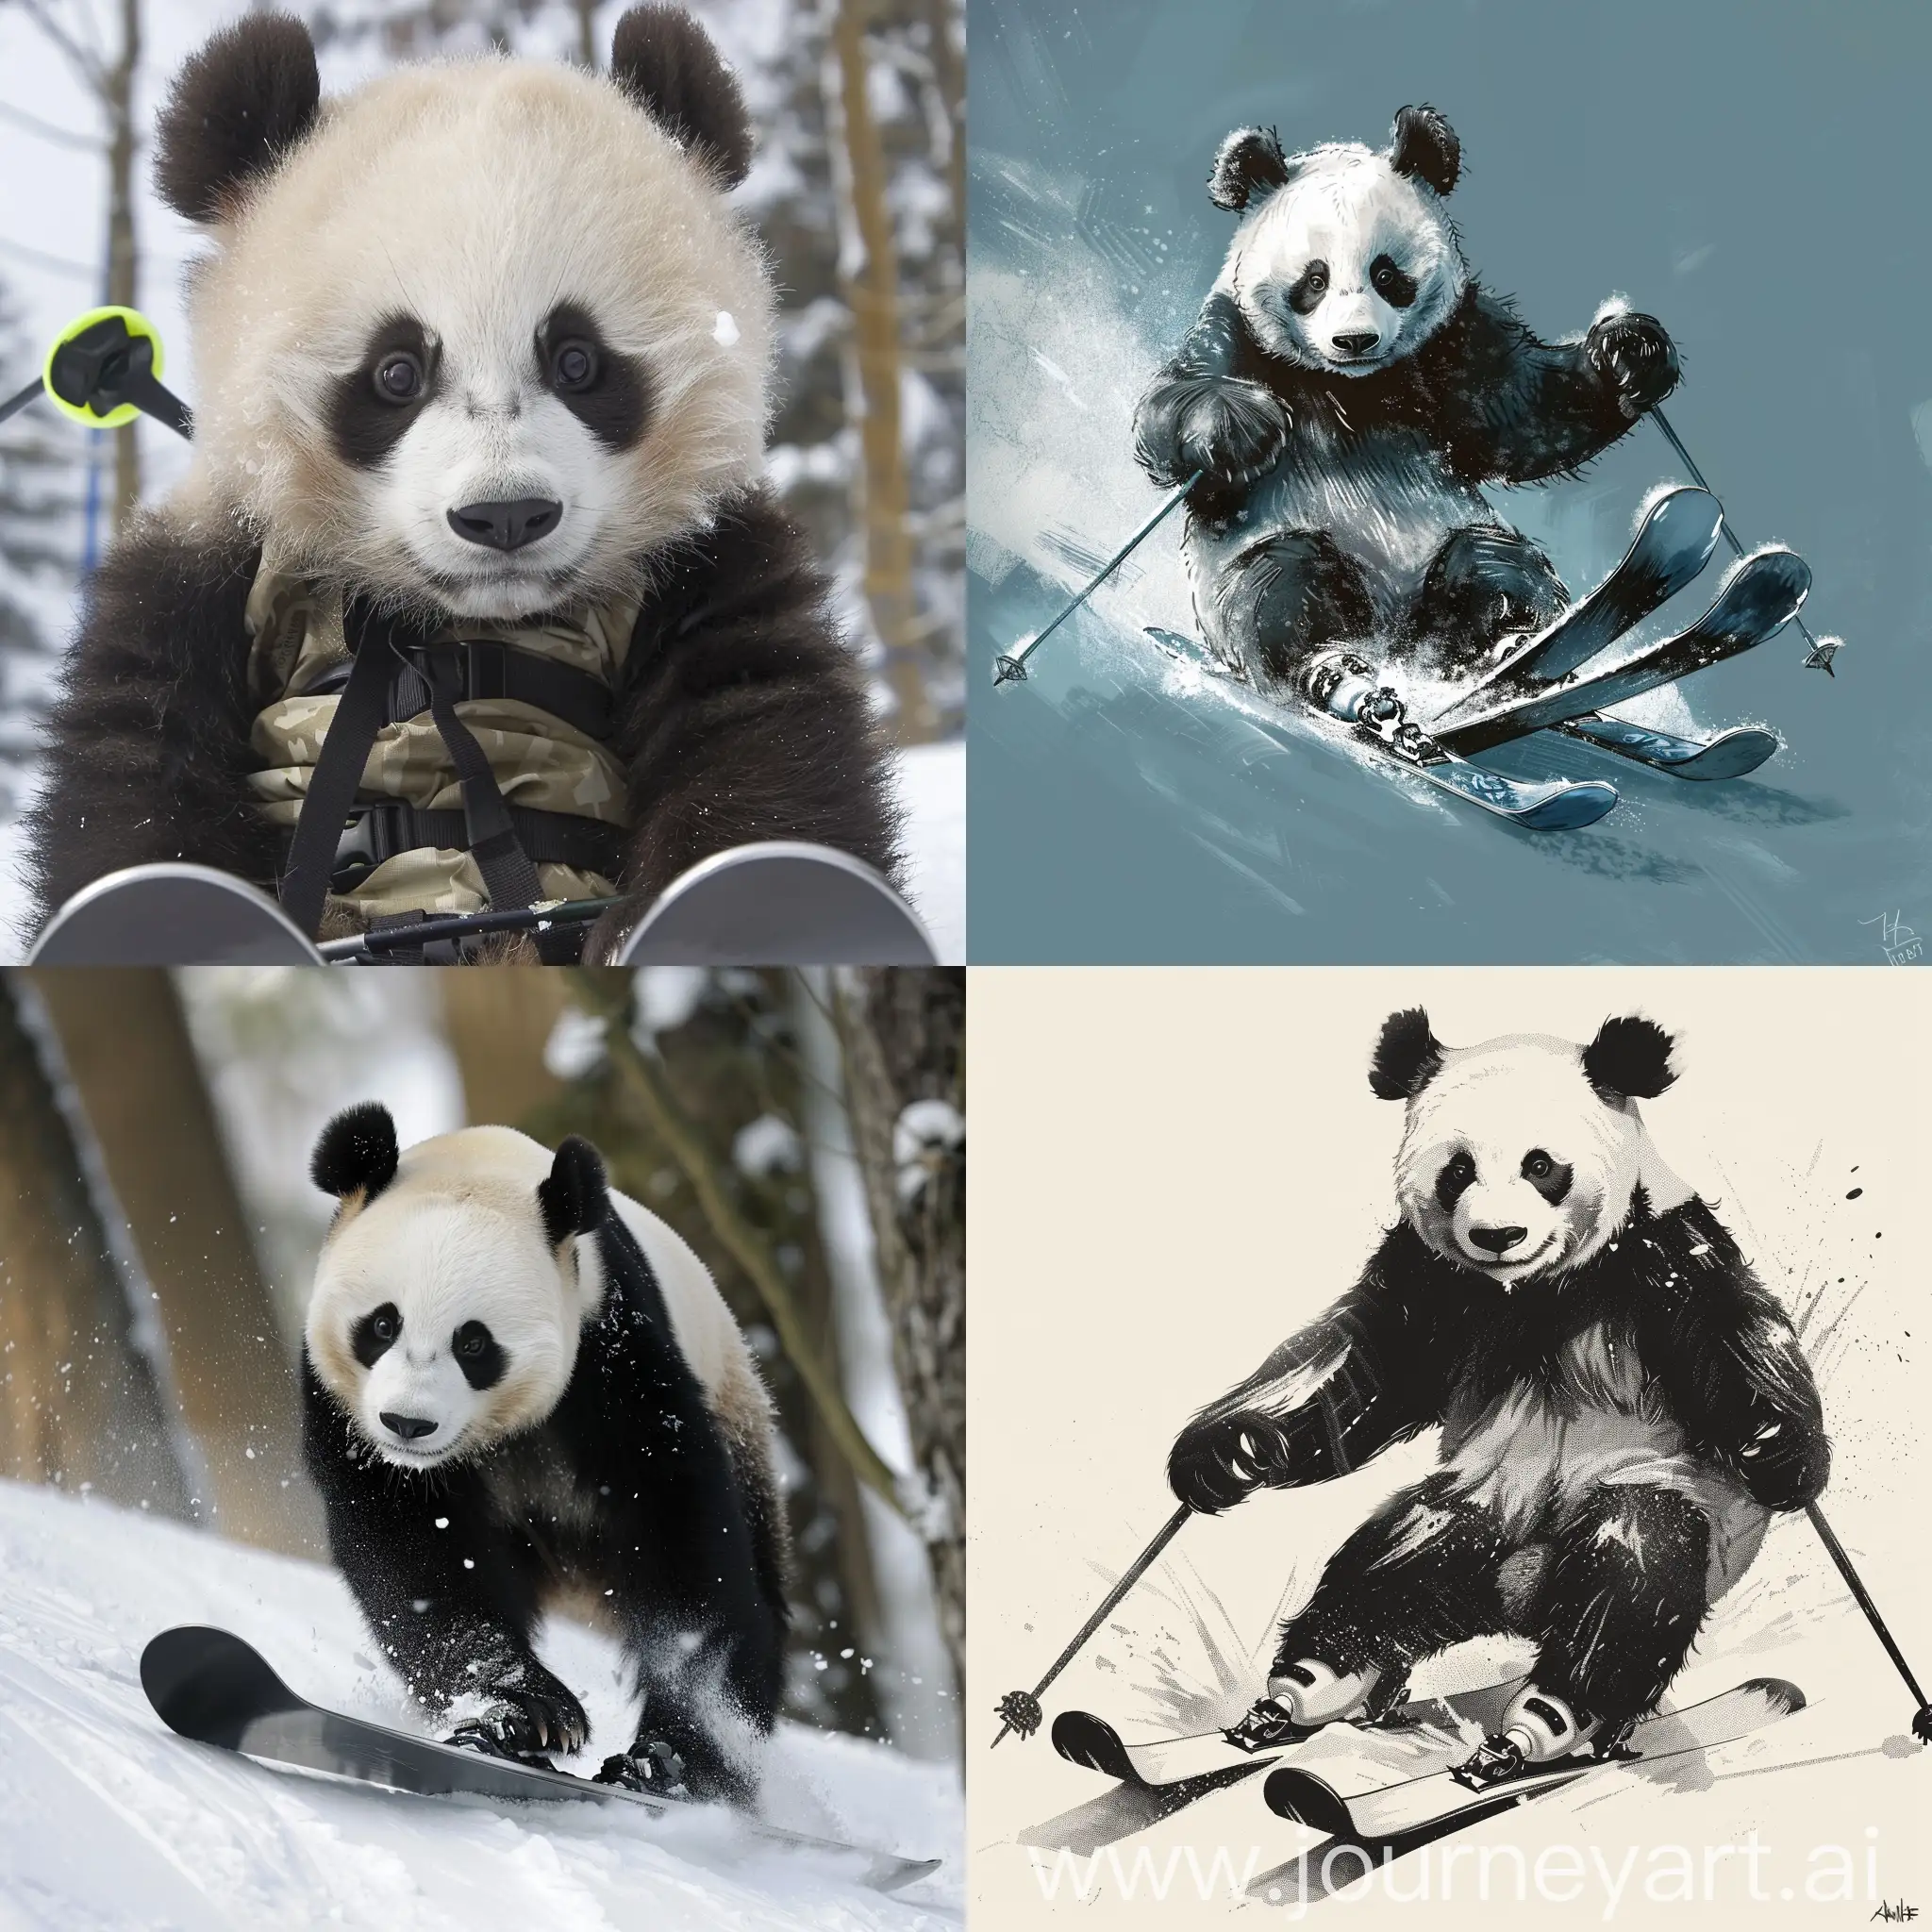 Adorable-Panda-Enjoying-Skiing-Adventure